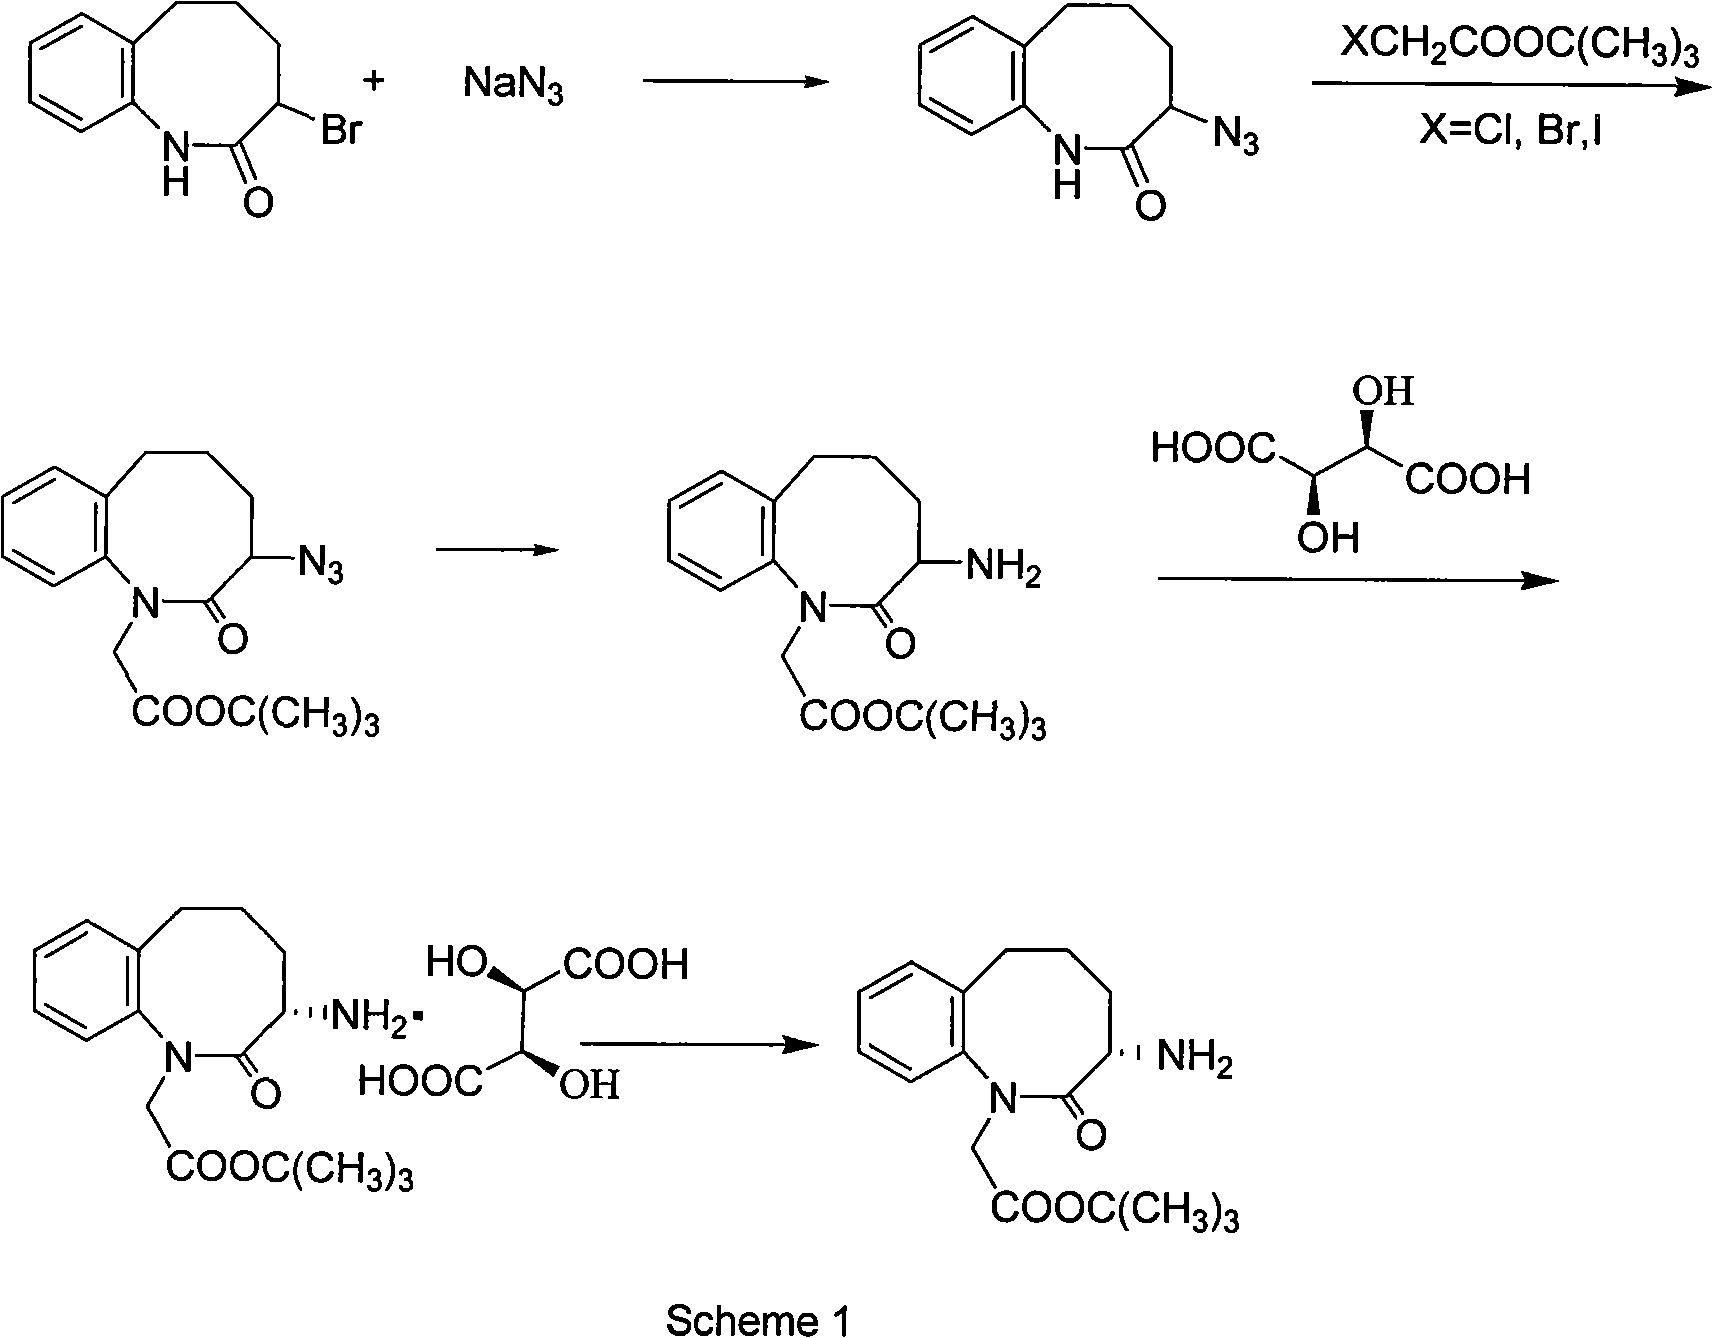 Method for preparing 3-(S)- amino-2,3,4,5-tetrahydro-2-oxy-1H-1-benzazepin-1-tert-butyl acetate